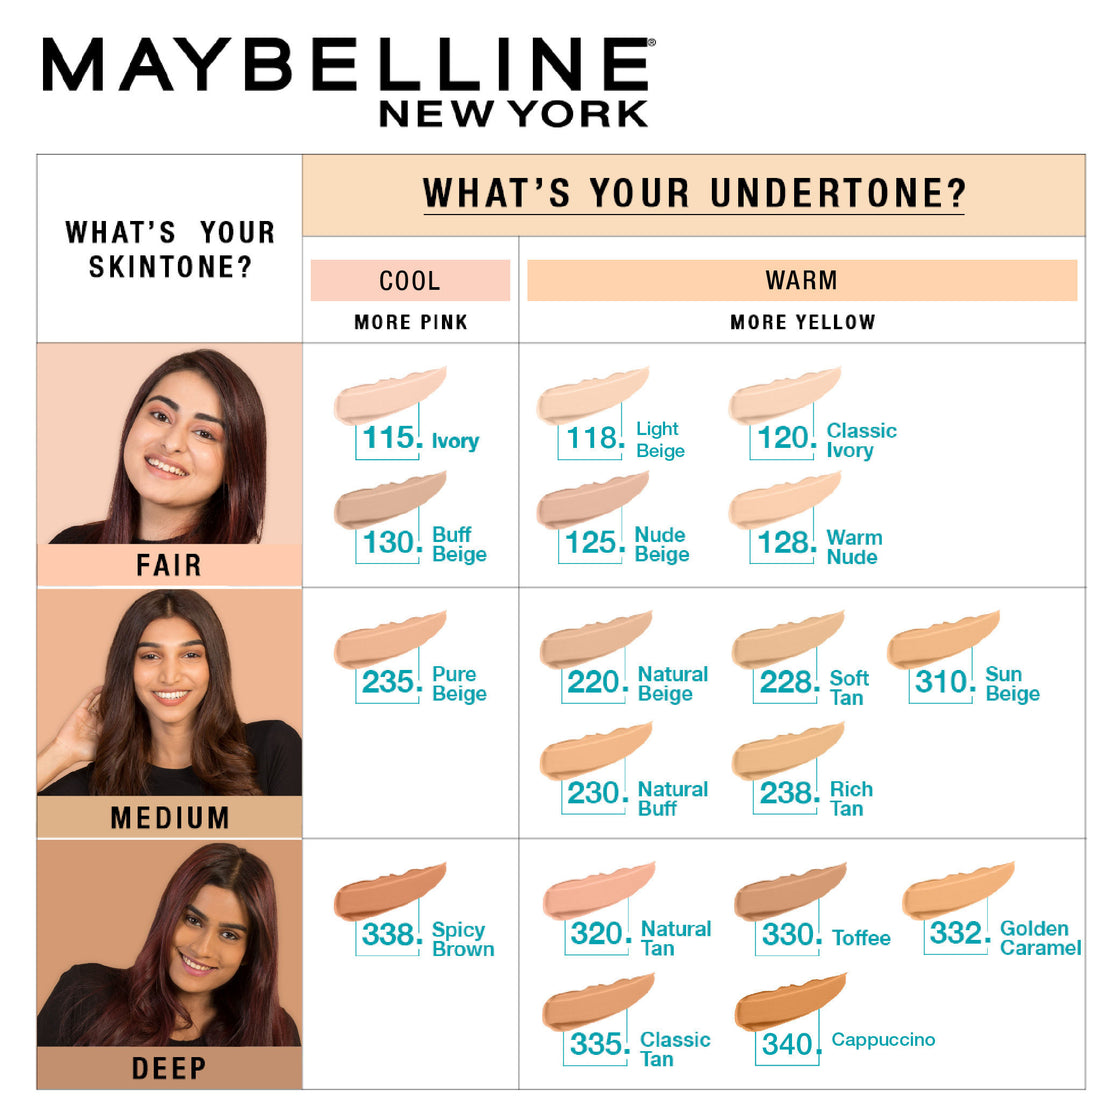 Maybelline New York Fit Me Matte+Poreless Liquid Foundation 16H Oil Control - 228 Soft Tan